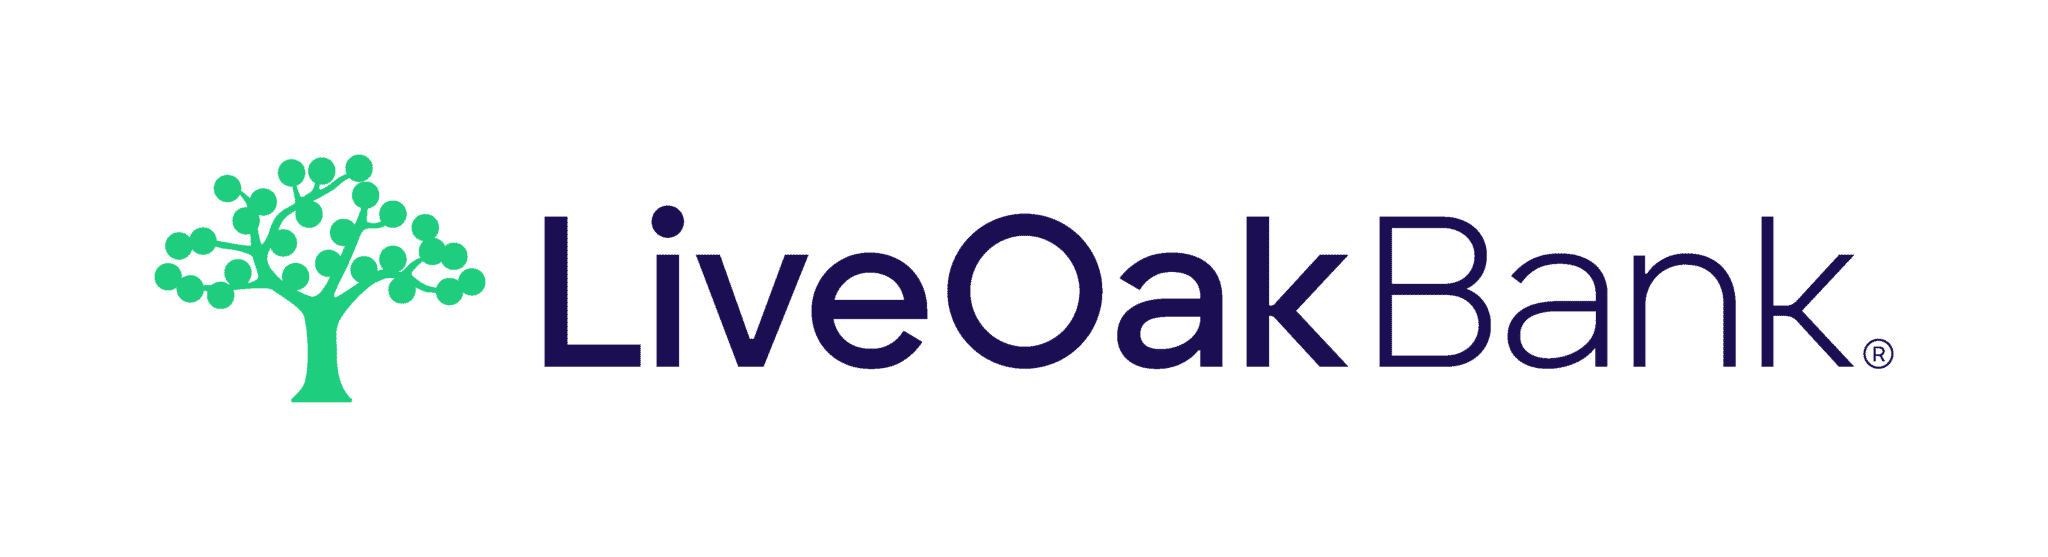 Live Oak Bank 3-Year Business CD